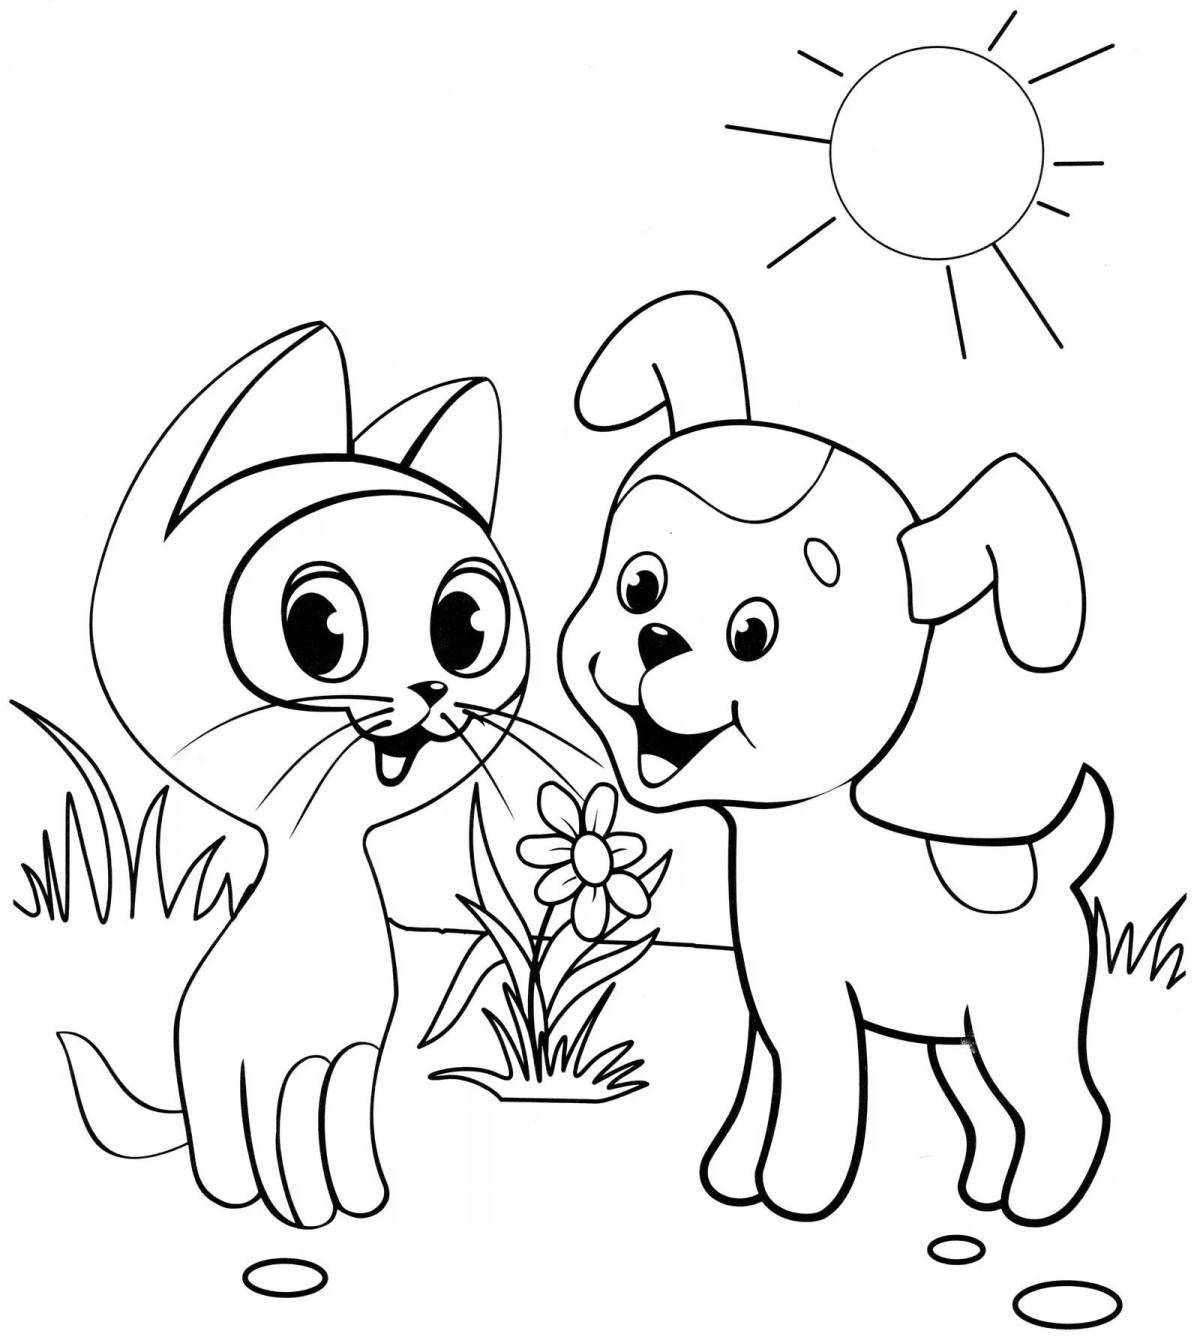 Cute friendship cartoon coloring book